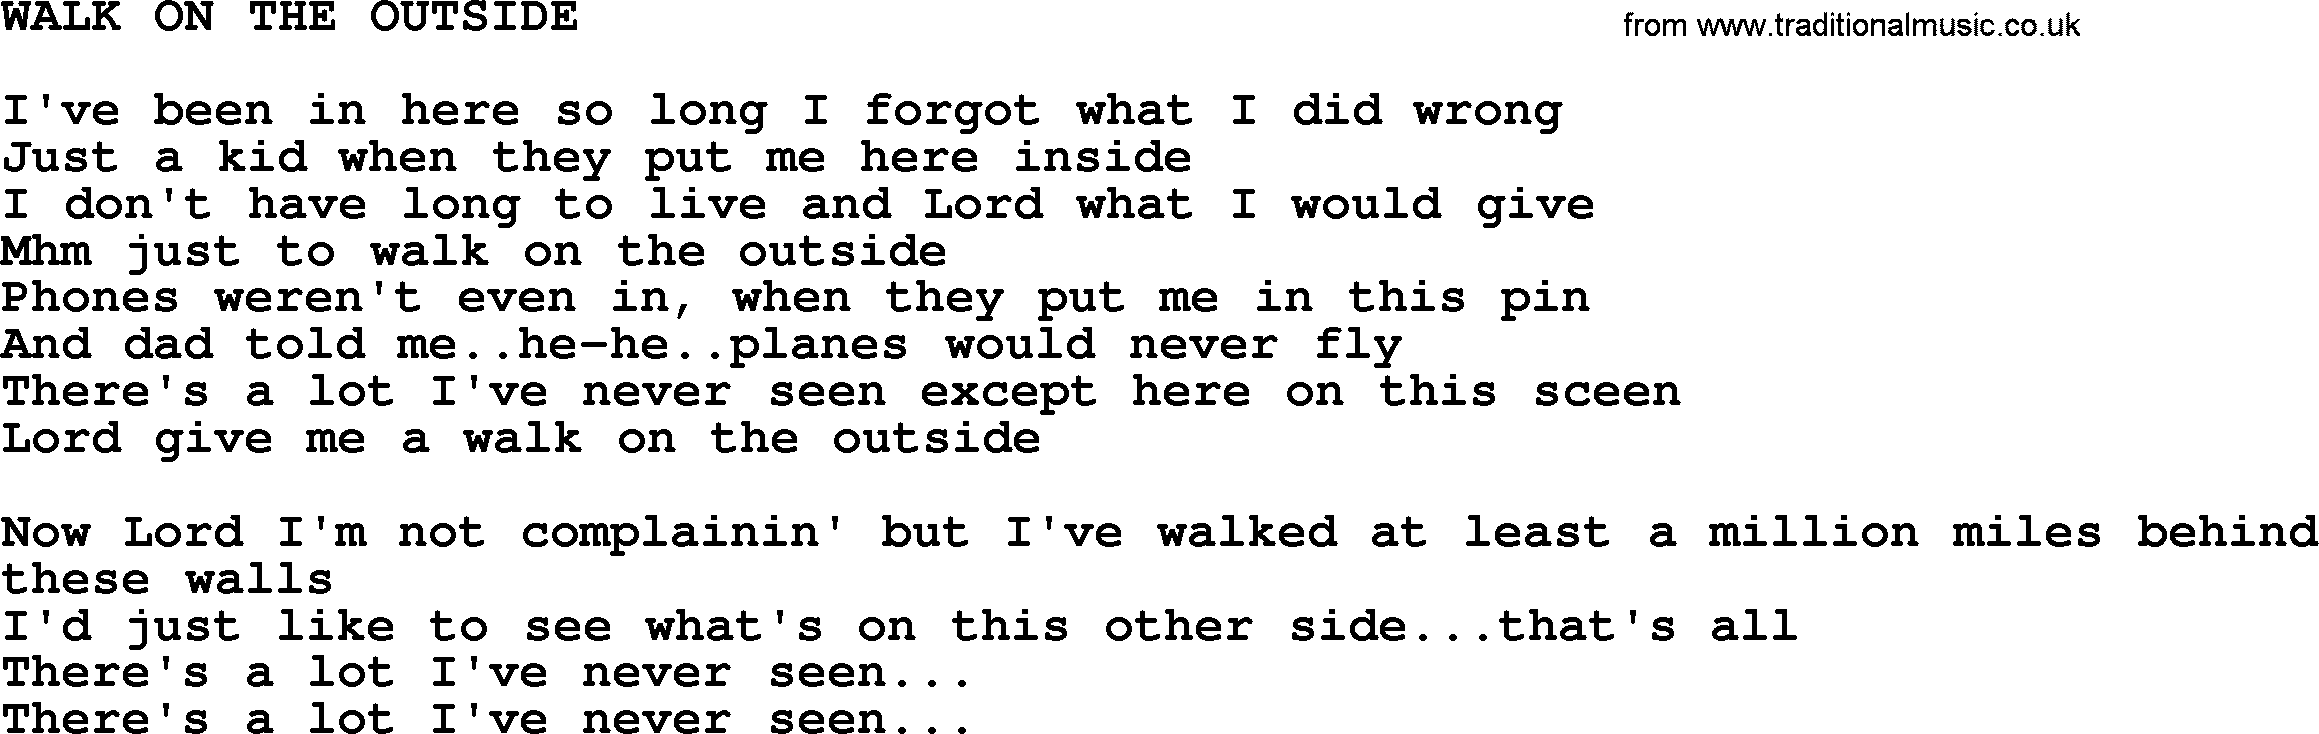 Merle Haggard song: Walk On The Outside, lyrics.